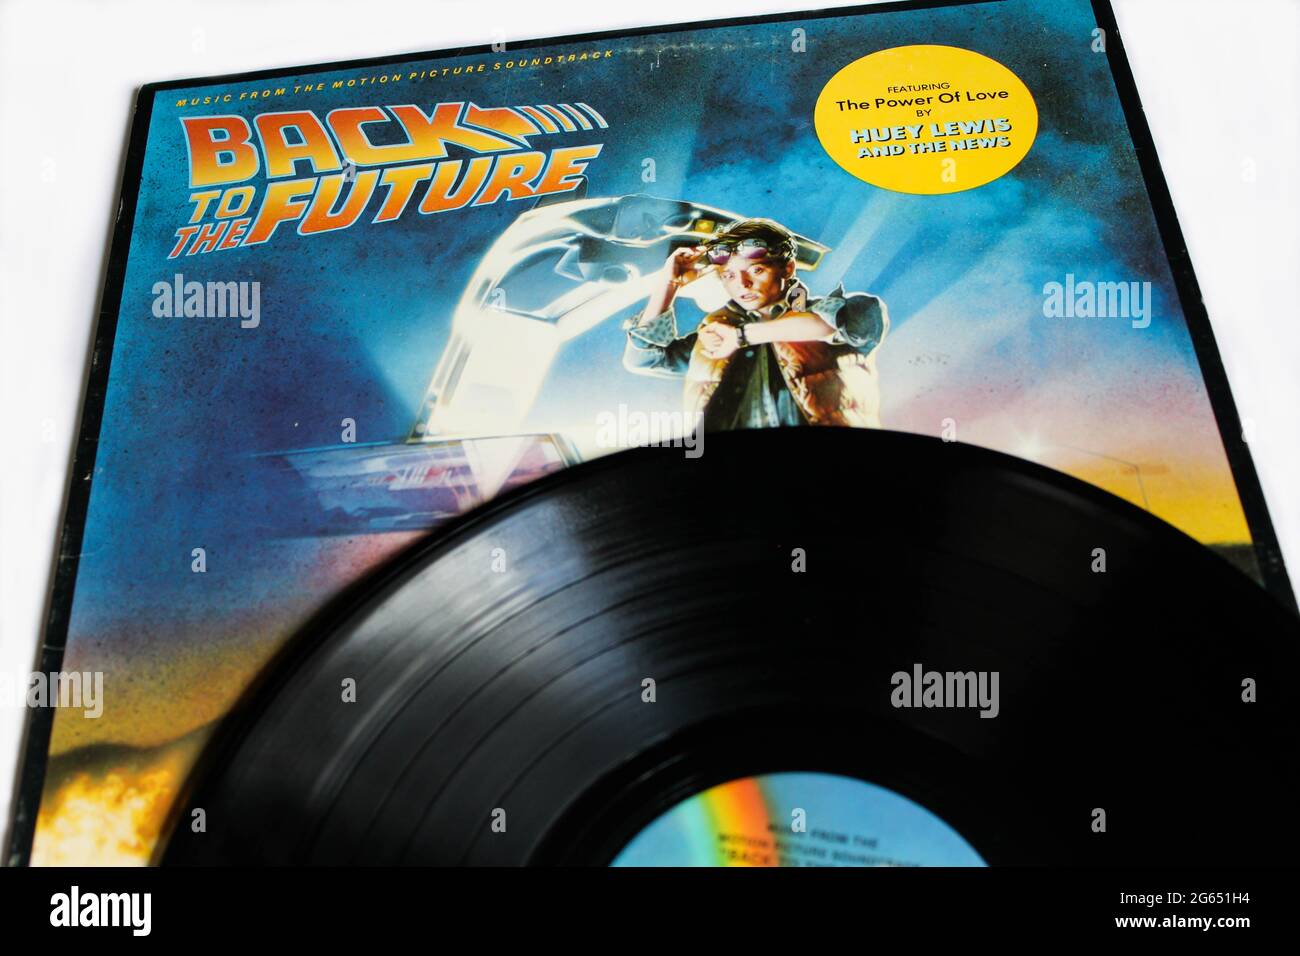 Back To The Future Film Motion Picture Soundtrack LP Vinyl record album cover Stock Photo